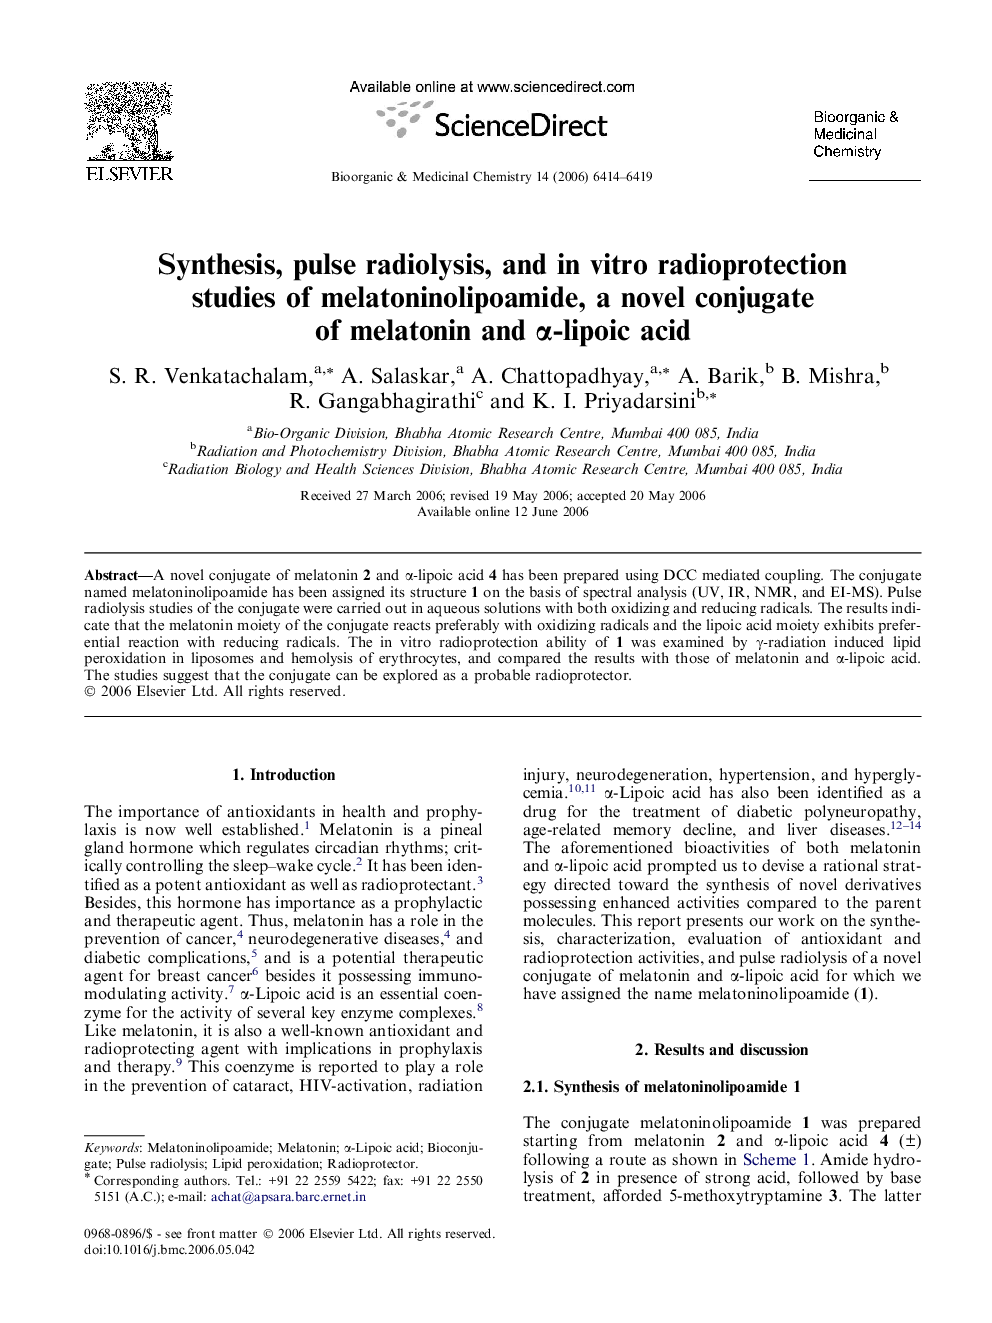 Synthesis, pulse radiolysis, and in vitro radioprotection studies of melatoninolipoamide, a novel conjugate of melatonin and α-lipoic acid